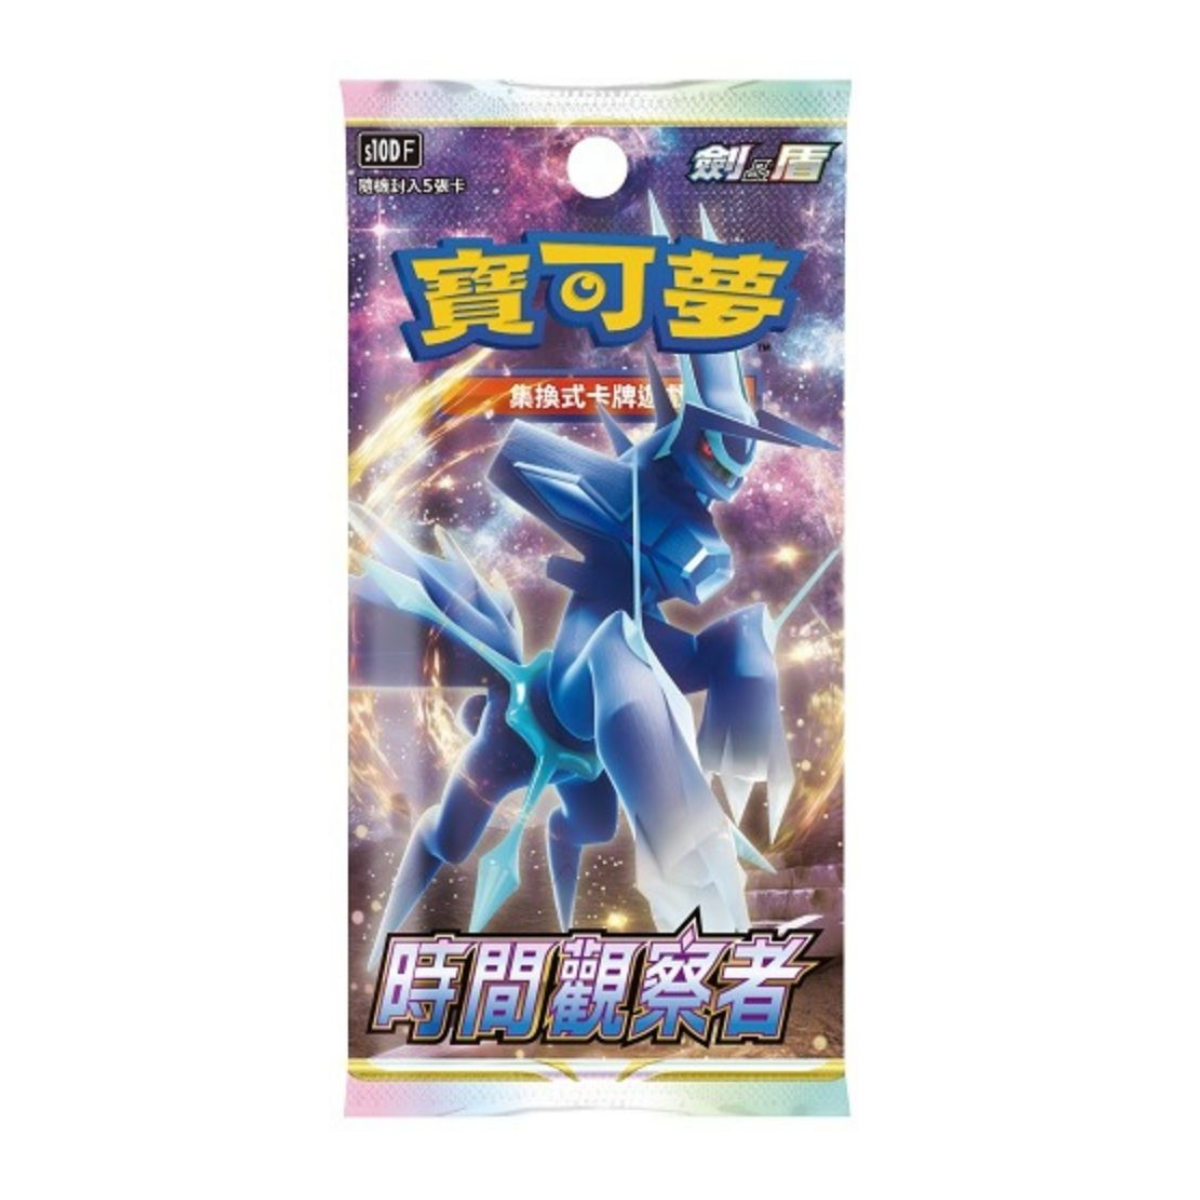 Pokemon TCG 剑 & 盾 擴充包 時間觀察者 [S10DF] (Chinese)-Single Pack (Random)-The Pokémon Company International-Ace Cards & Collectibles